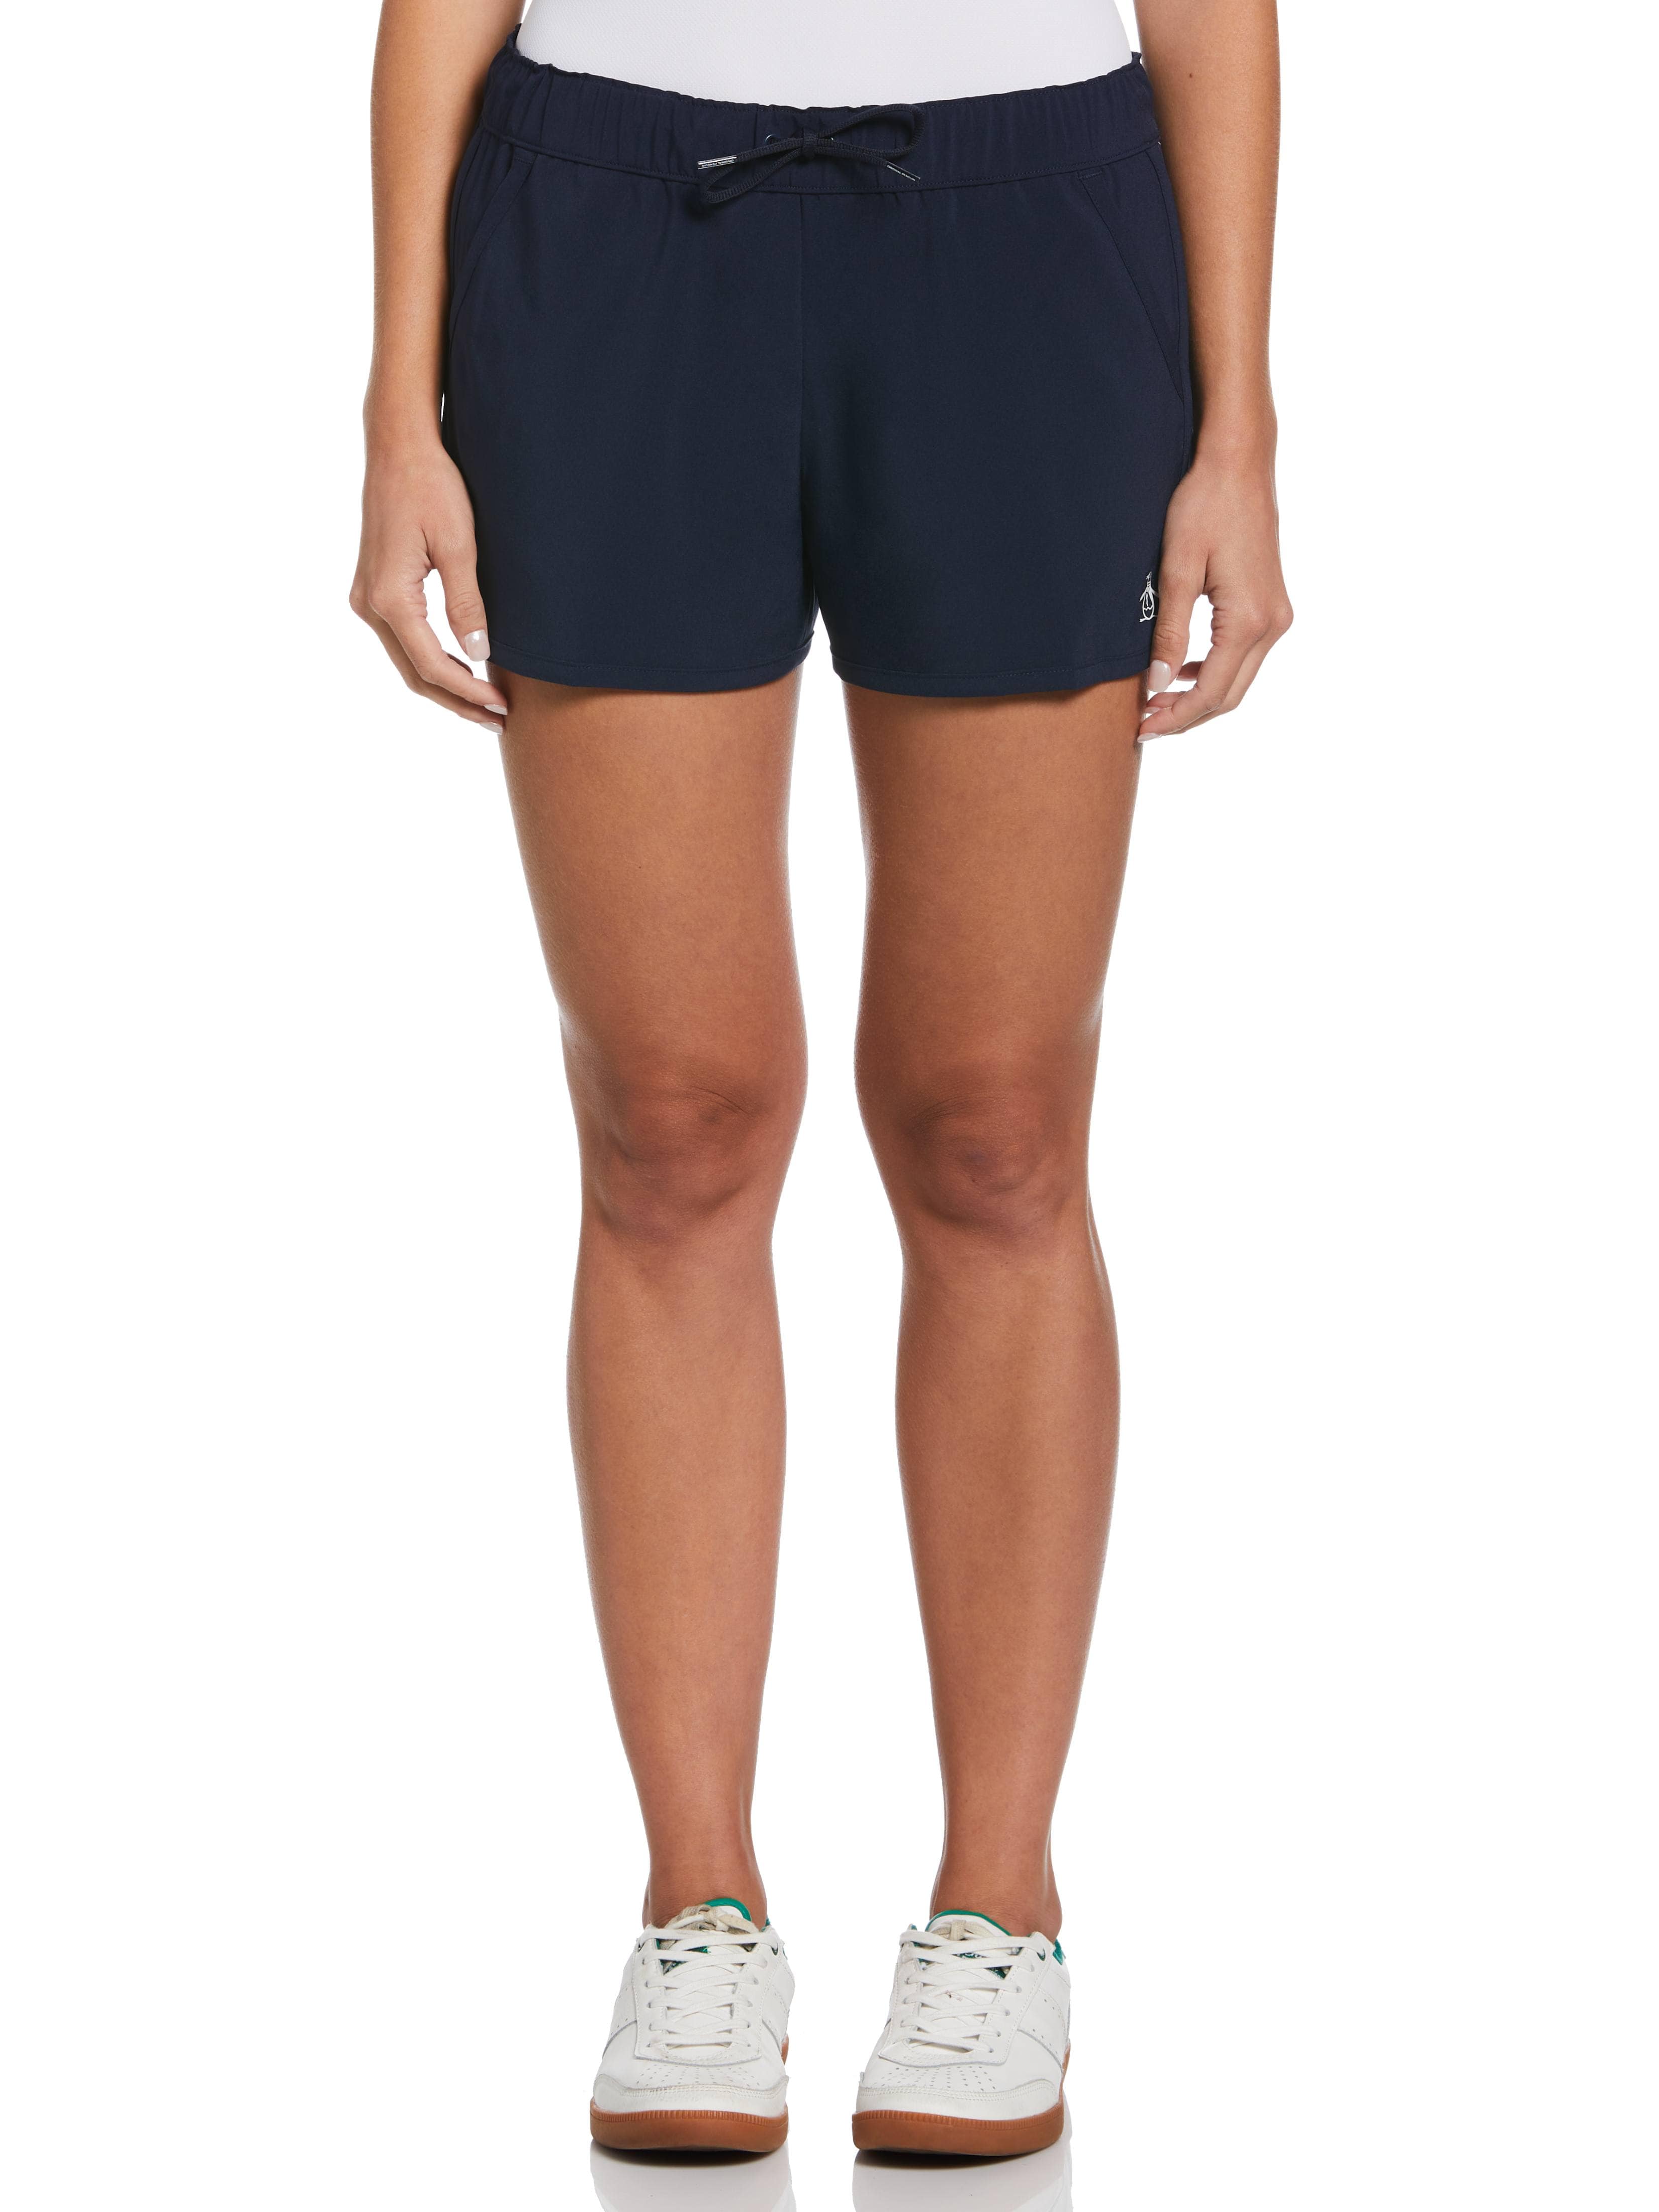 Original Penguin Womens Drawstring Shorts, Size 2XL, Dark Navy Blue, Poly Blend | Golf Apparel Shop